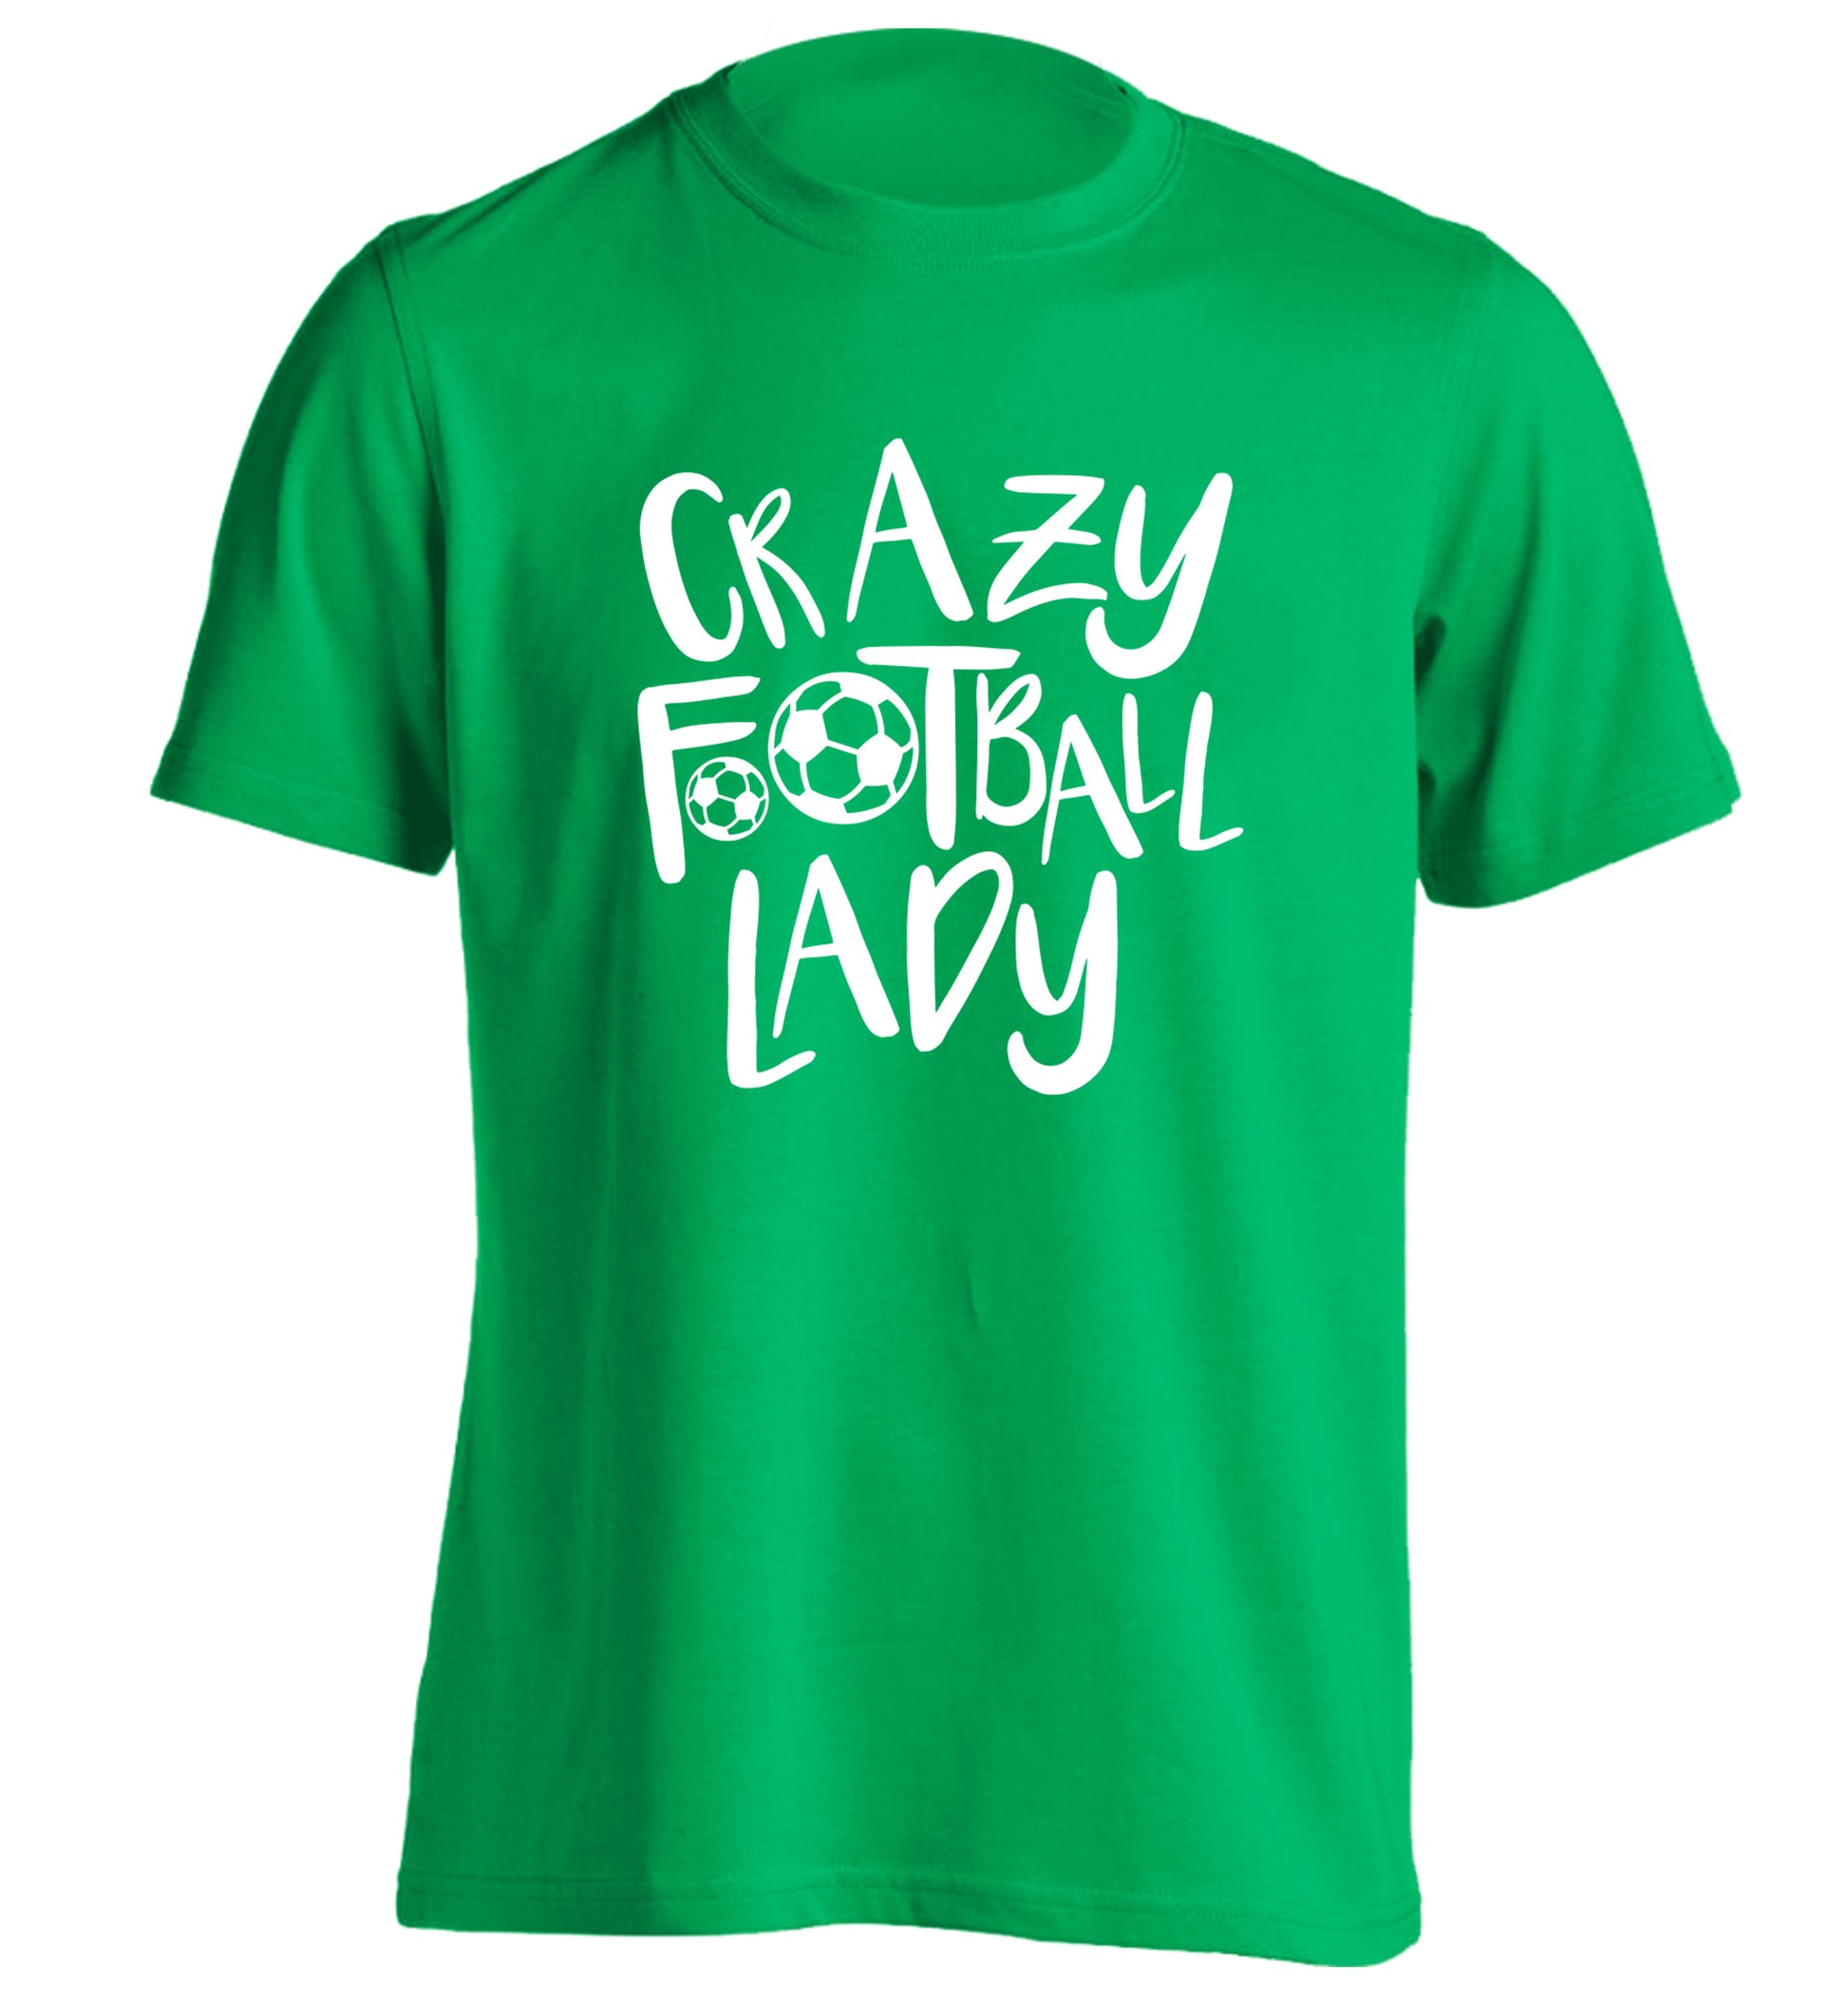 Crazy football lady adults unisexgreen Tshirt 2XL